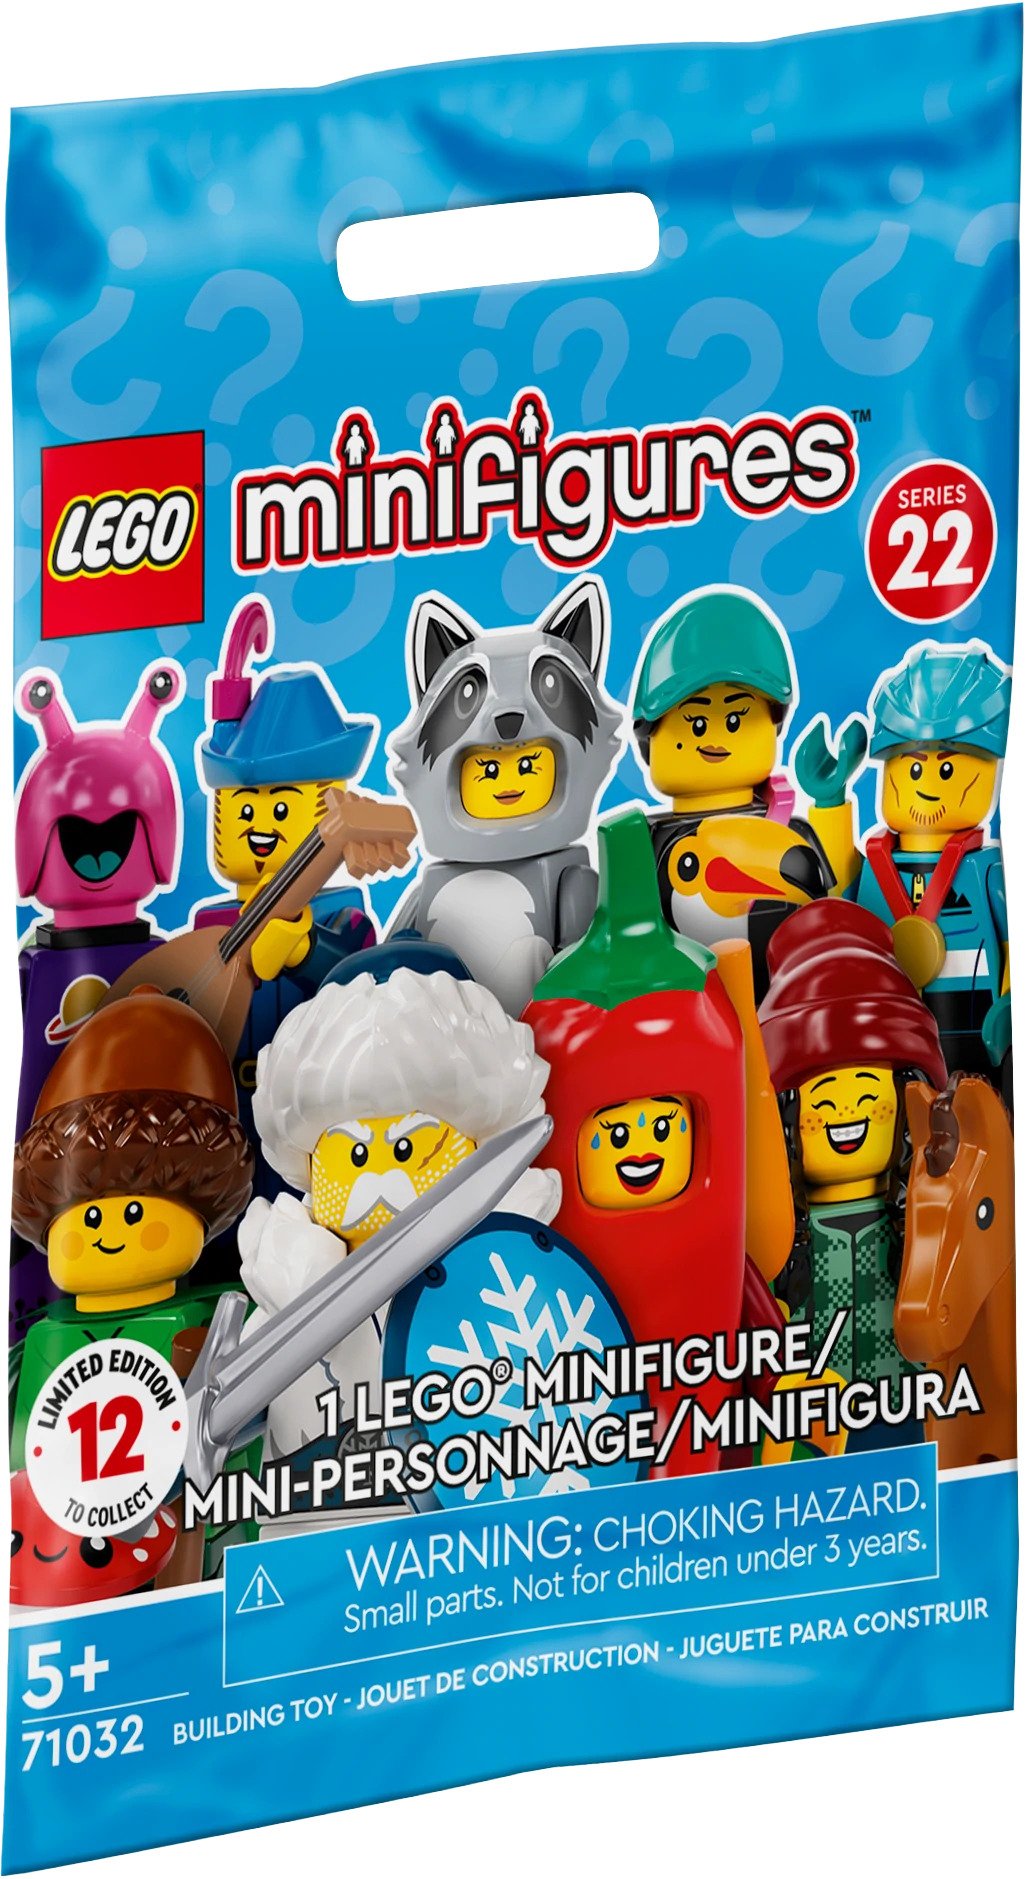 LEGO: Minifigures - Series 22